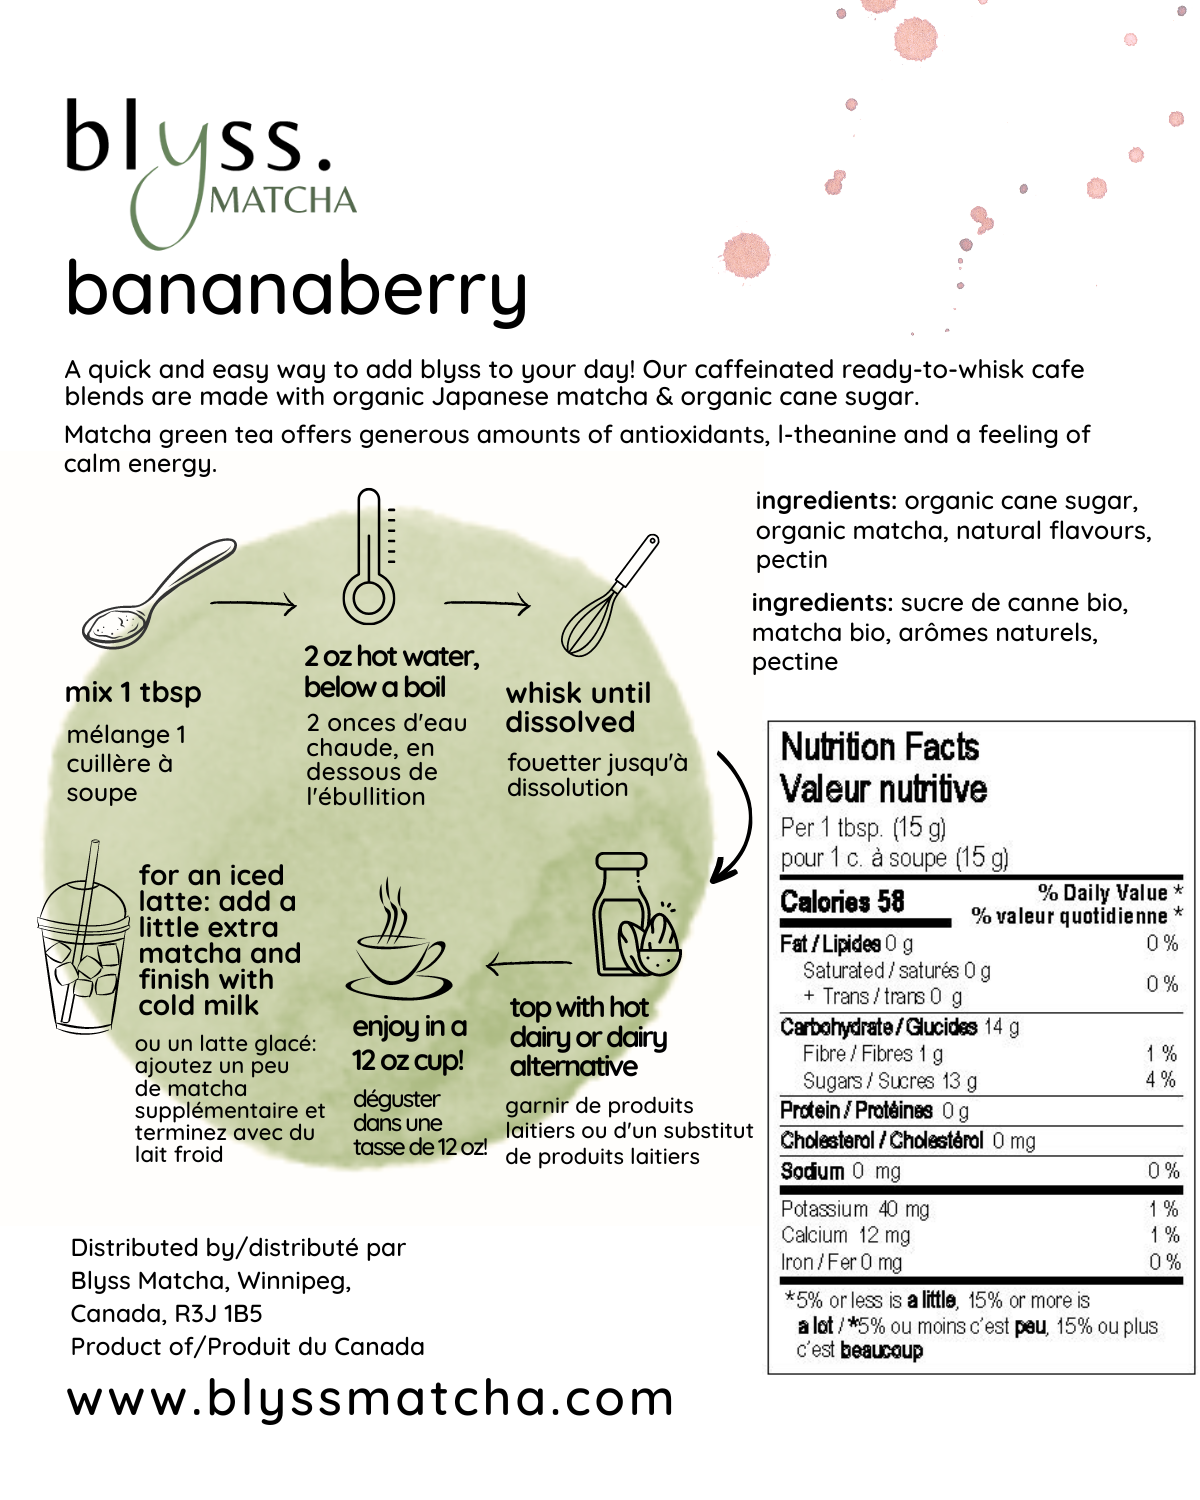 Bananaberry